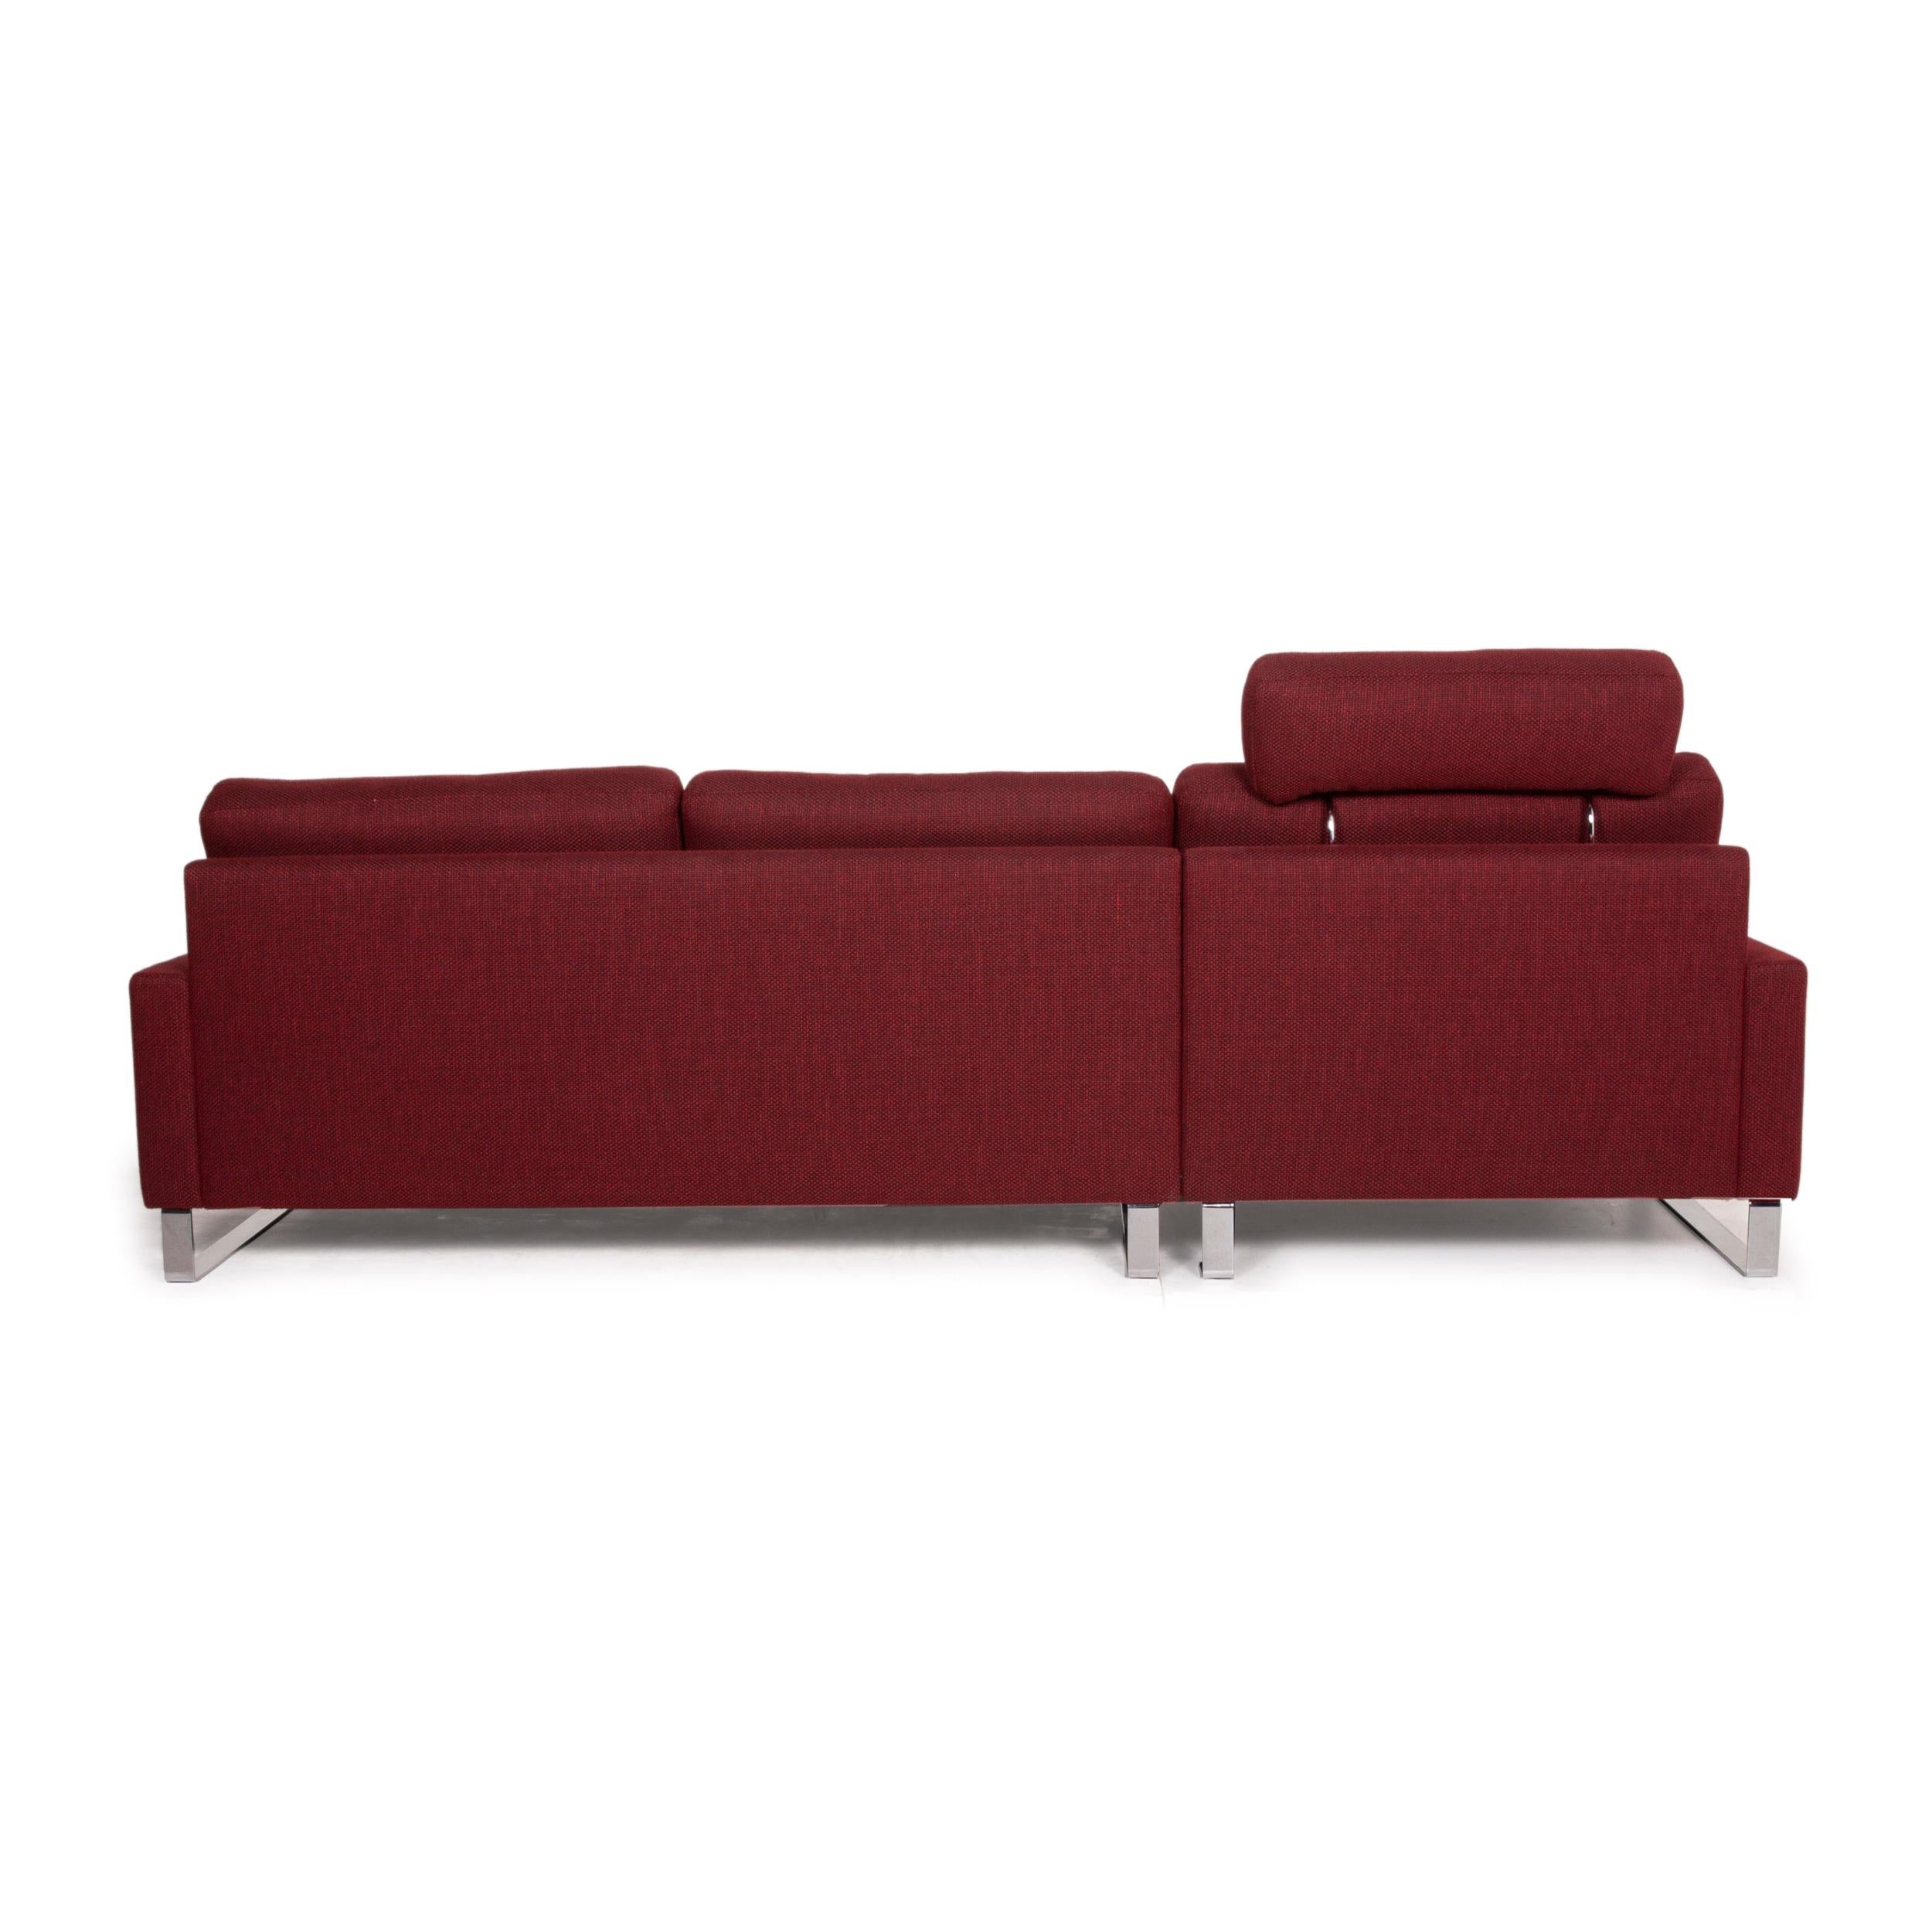 Erpo CL 500 Fabric Sofa Red Corner Sofa 5